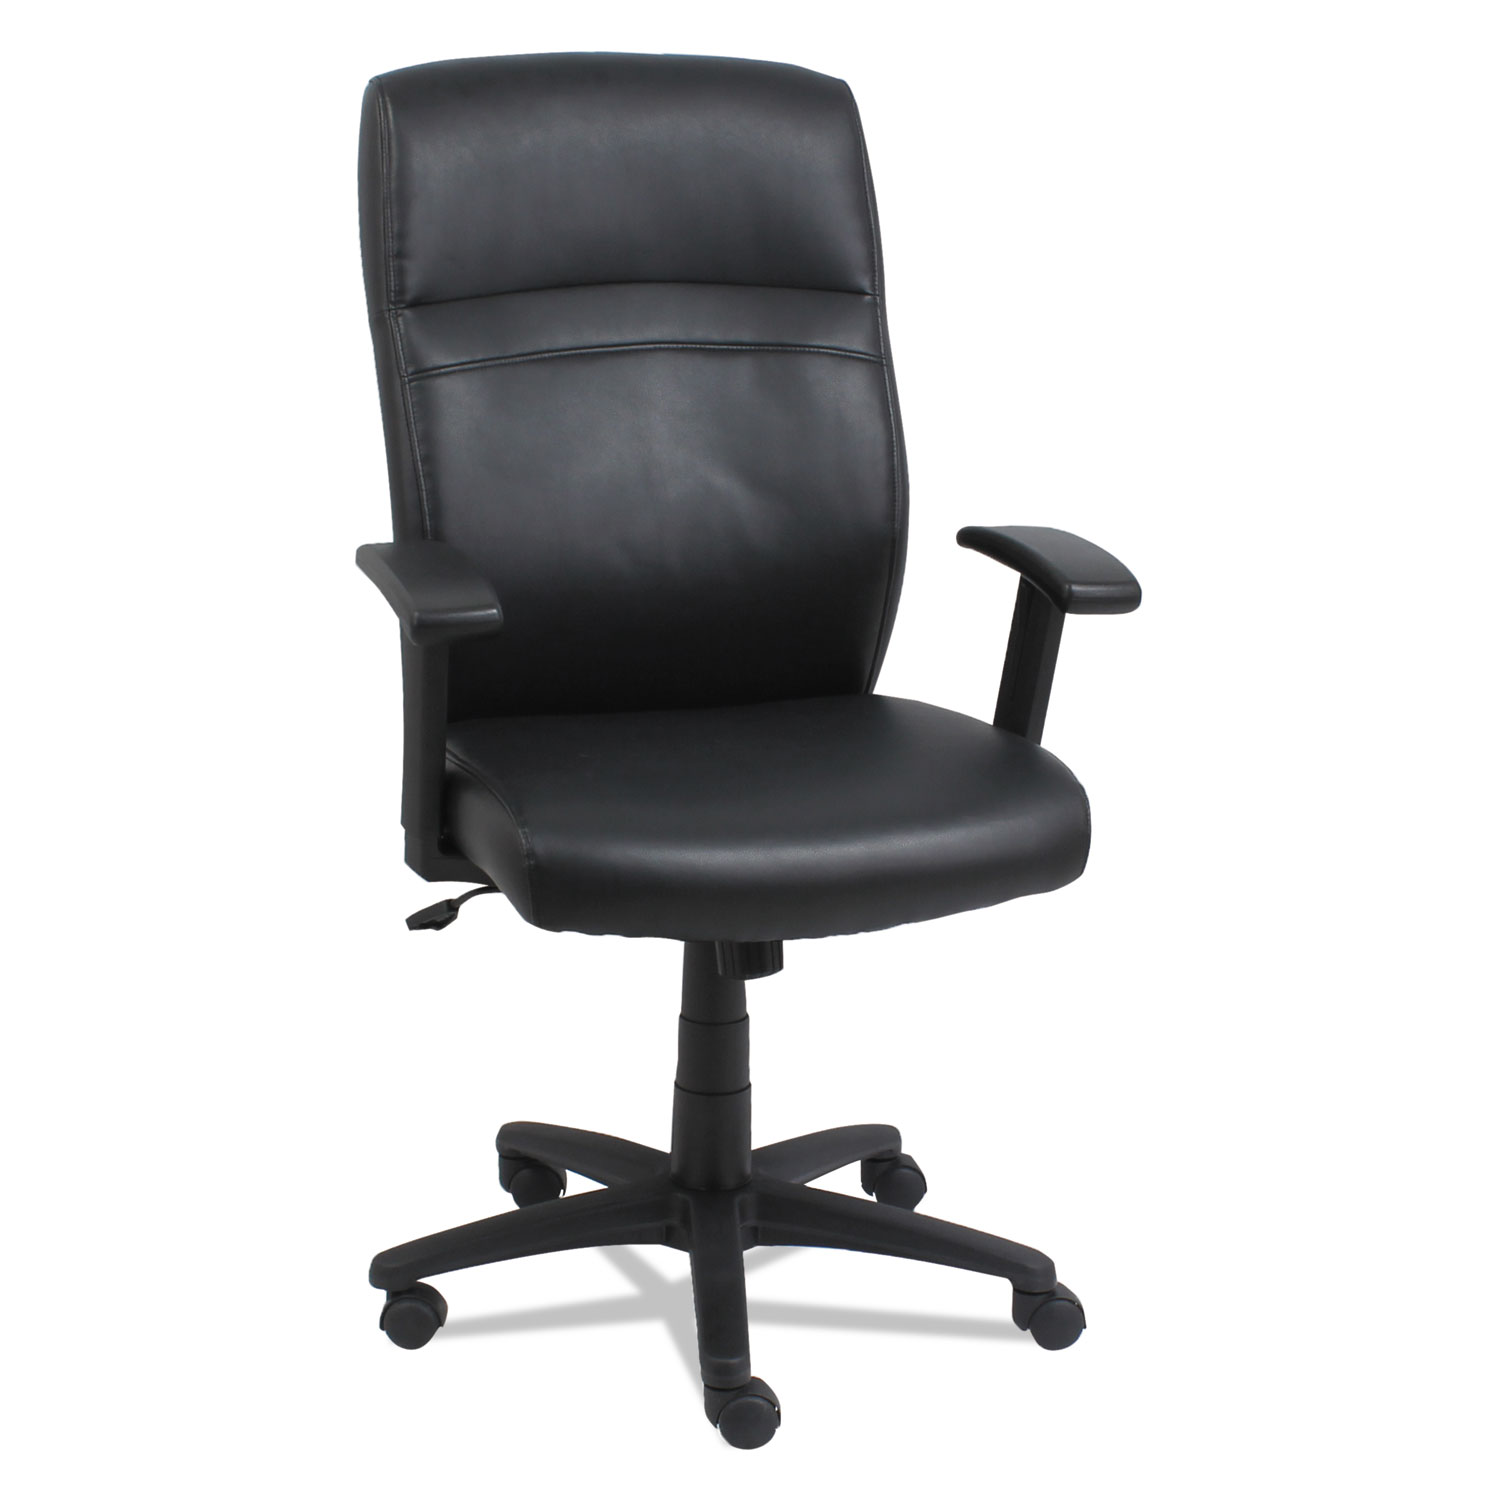  Alera ALECA4119 High-Back Swivel/Tilt Leather Chair, Supports up to 275 lbs., Black Seat/Black Back, Black Base (ALECA4119) 